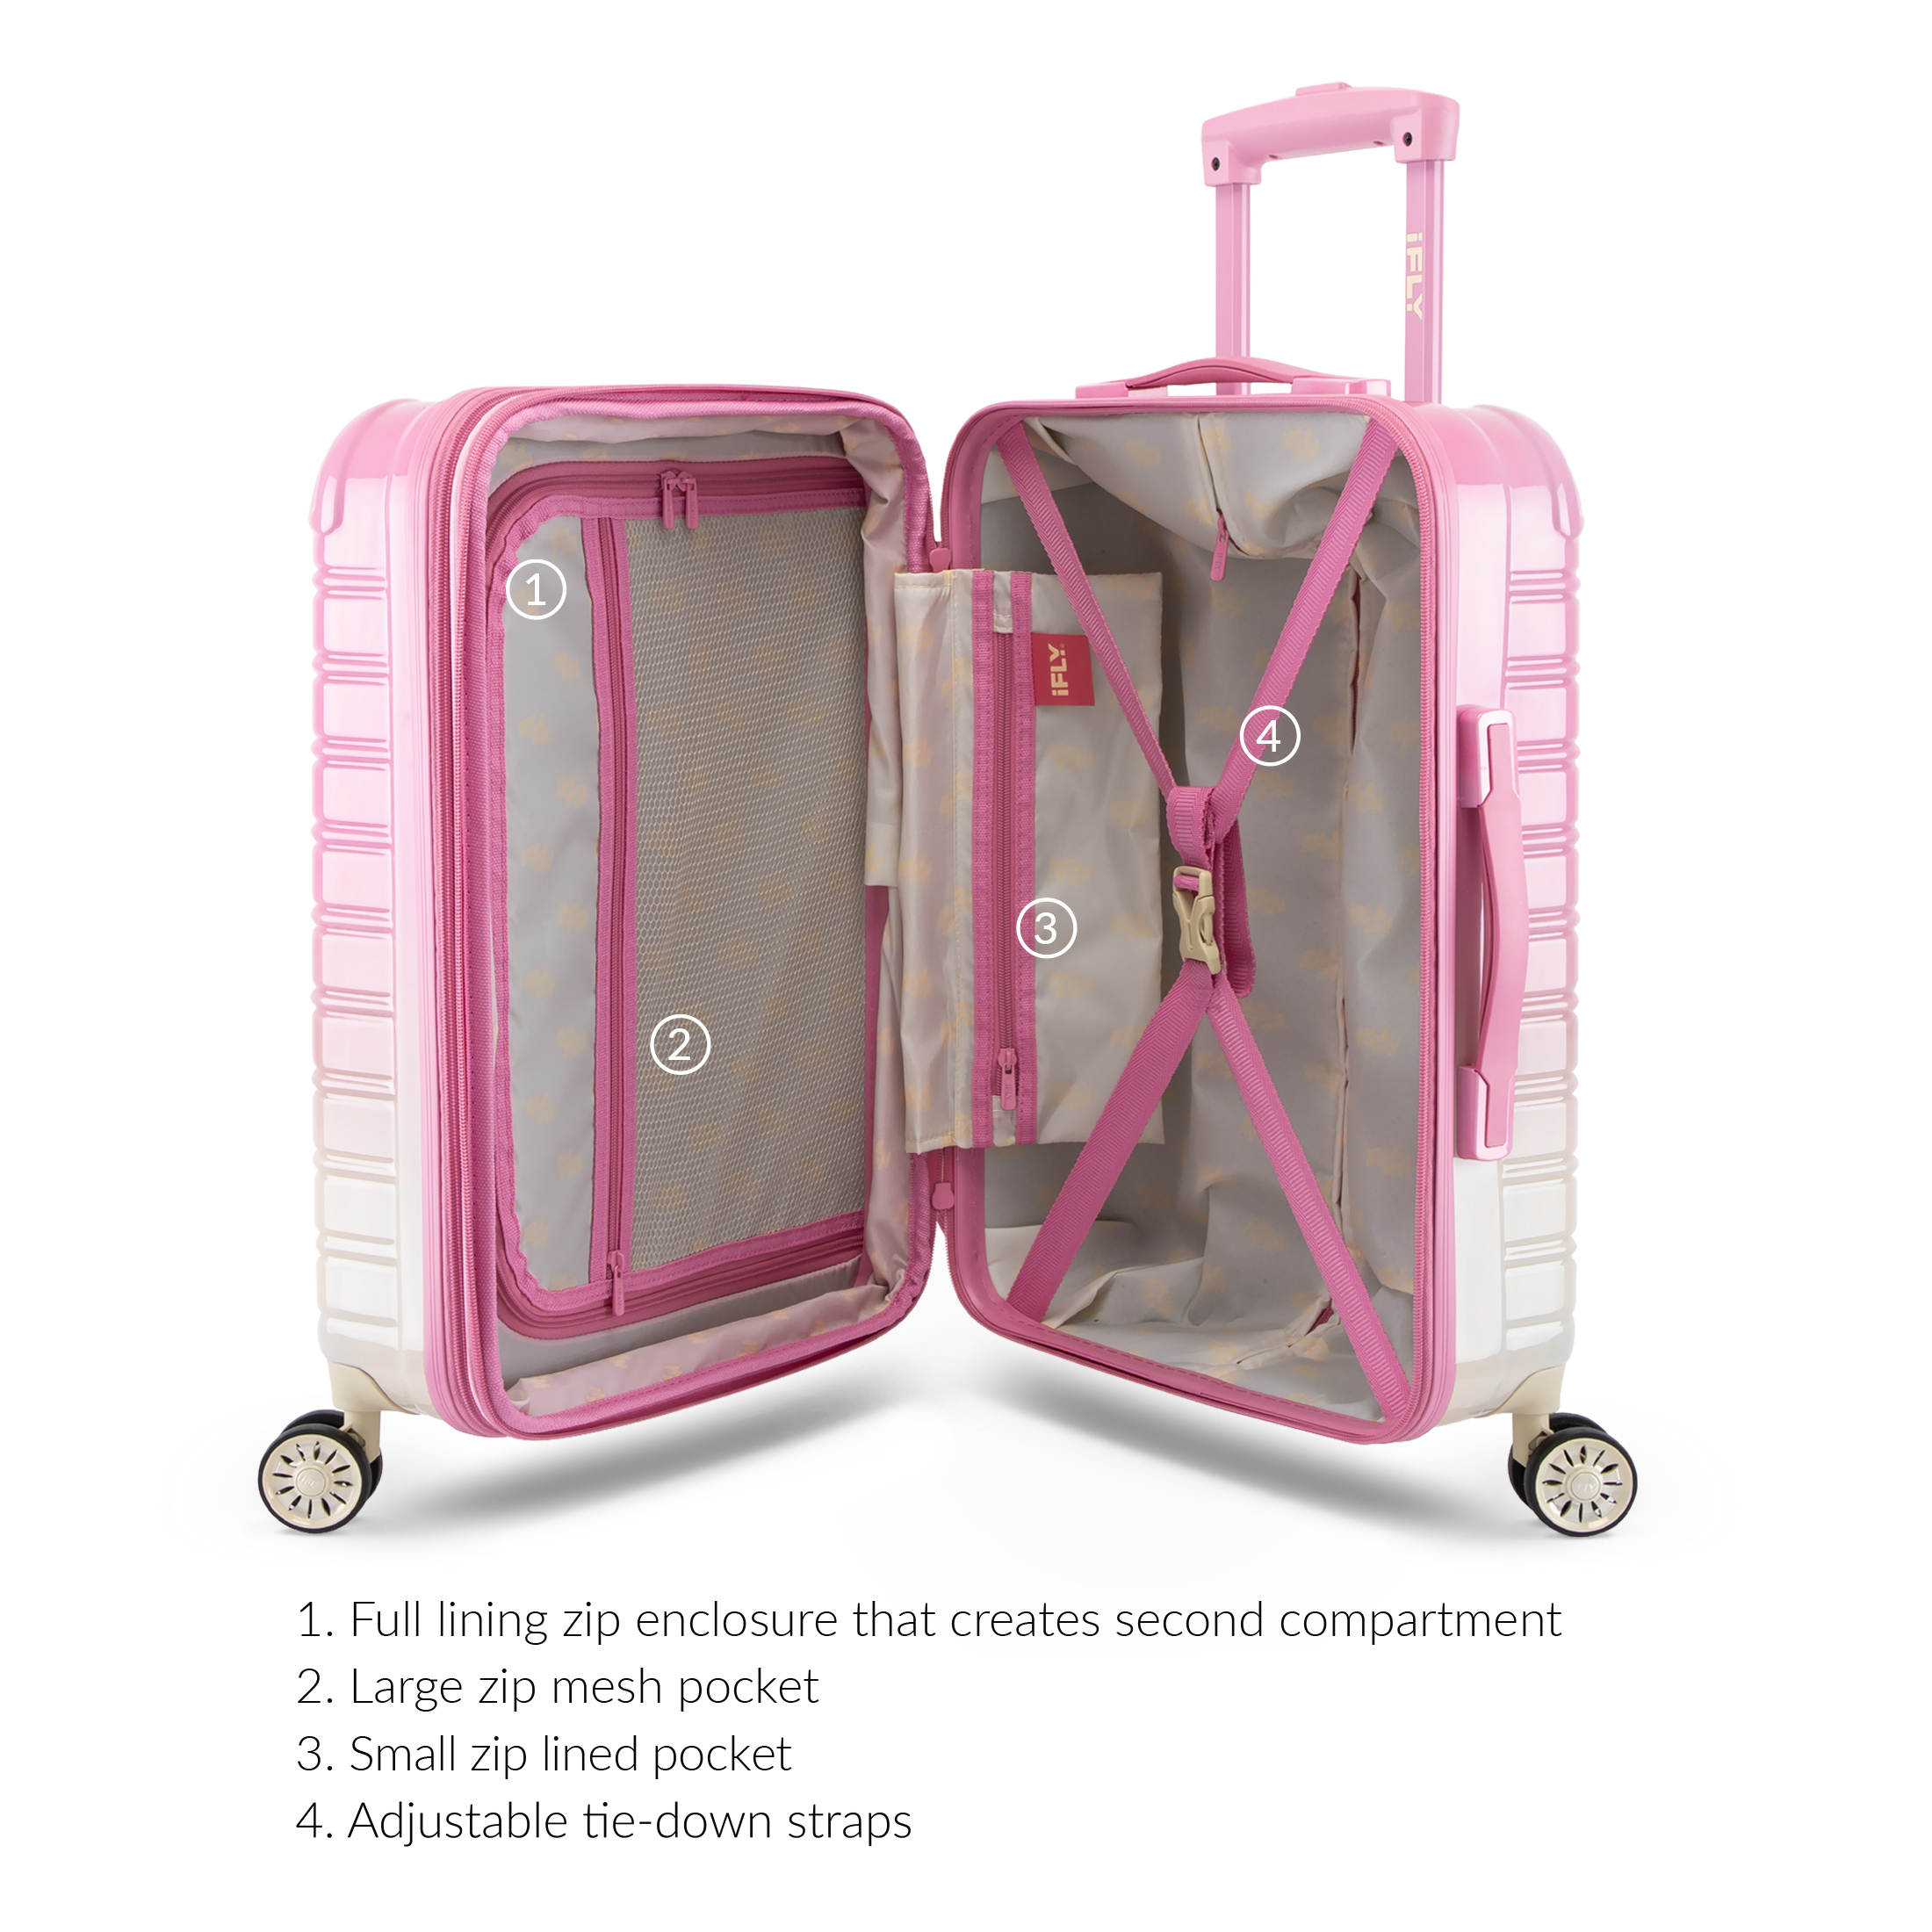 iFLY Hardside Fibertech Carry-on Luggage 20", Strawberry Lemonade - image 2 of 8